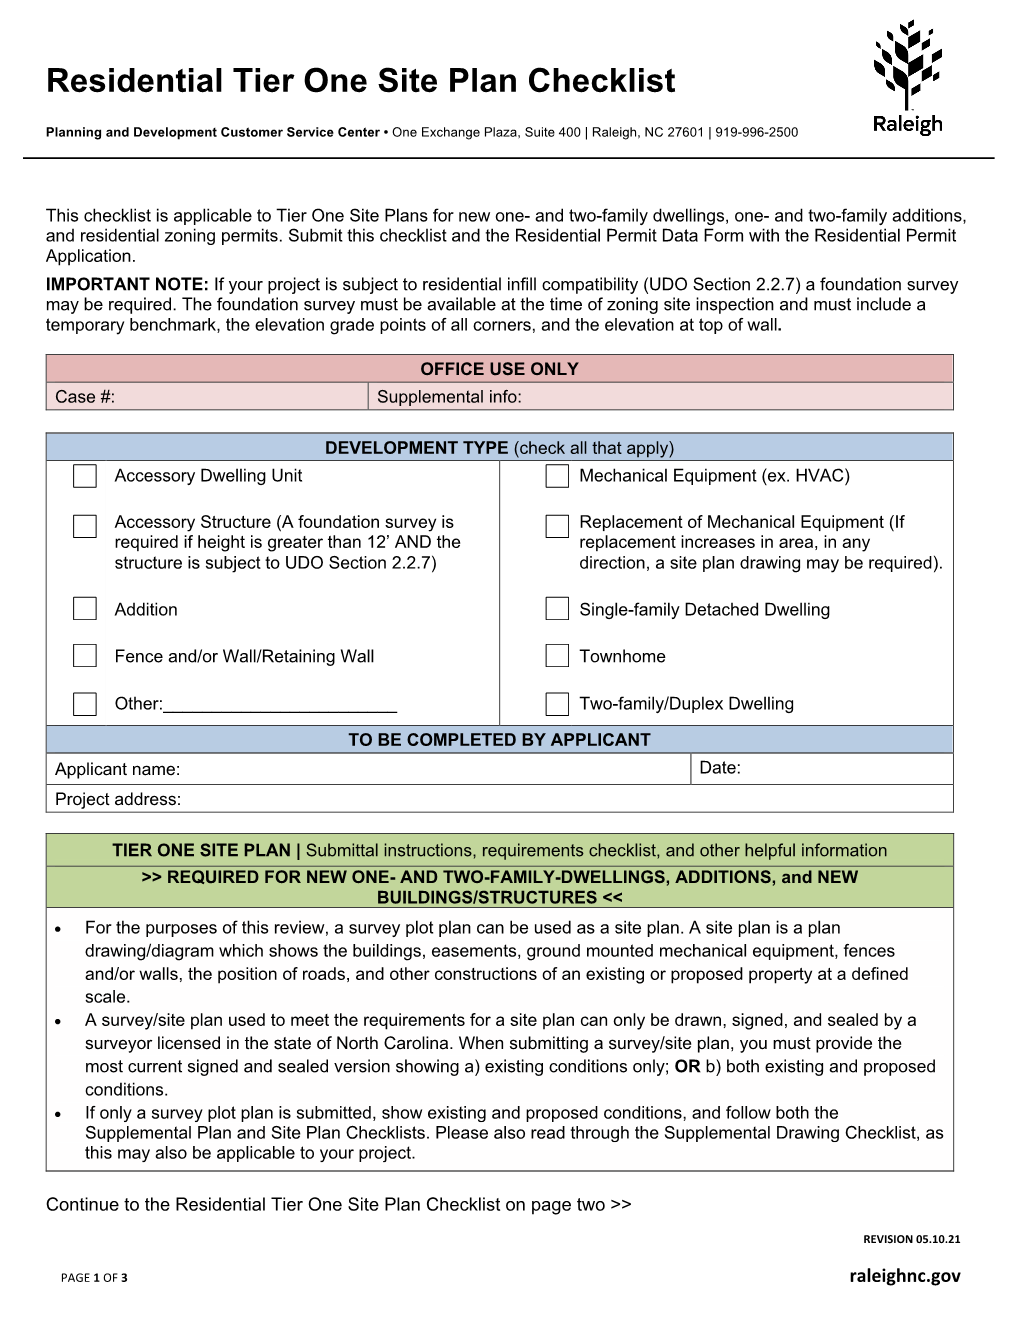 Residential Tier One Site Plan Checklist DocsLib